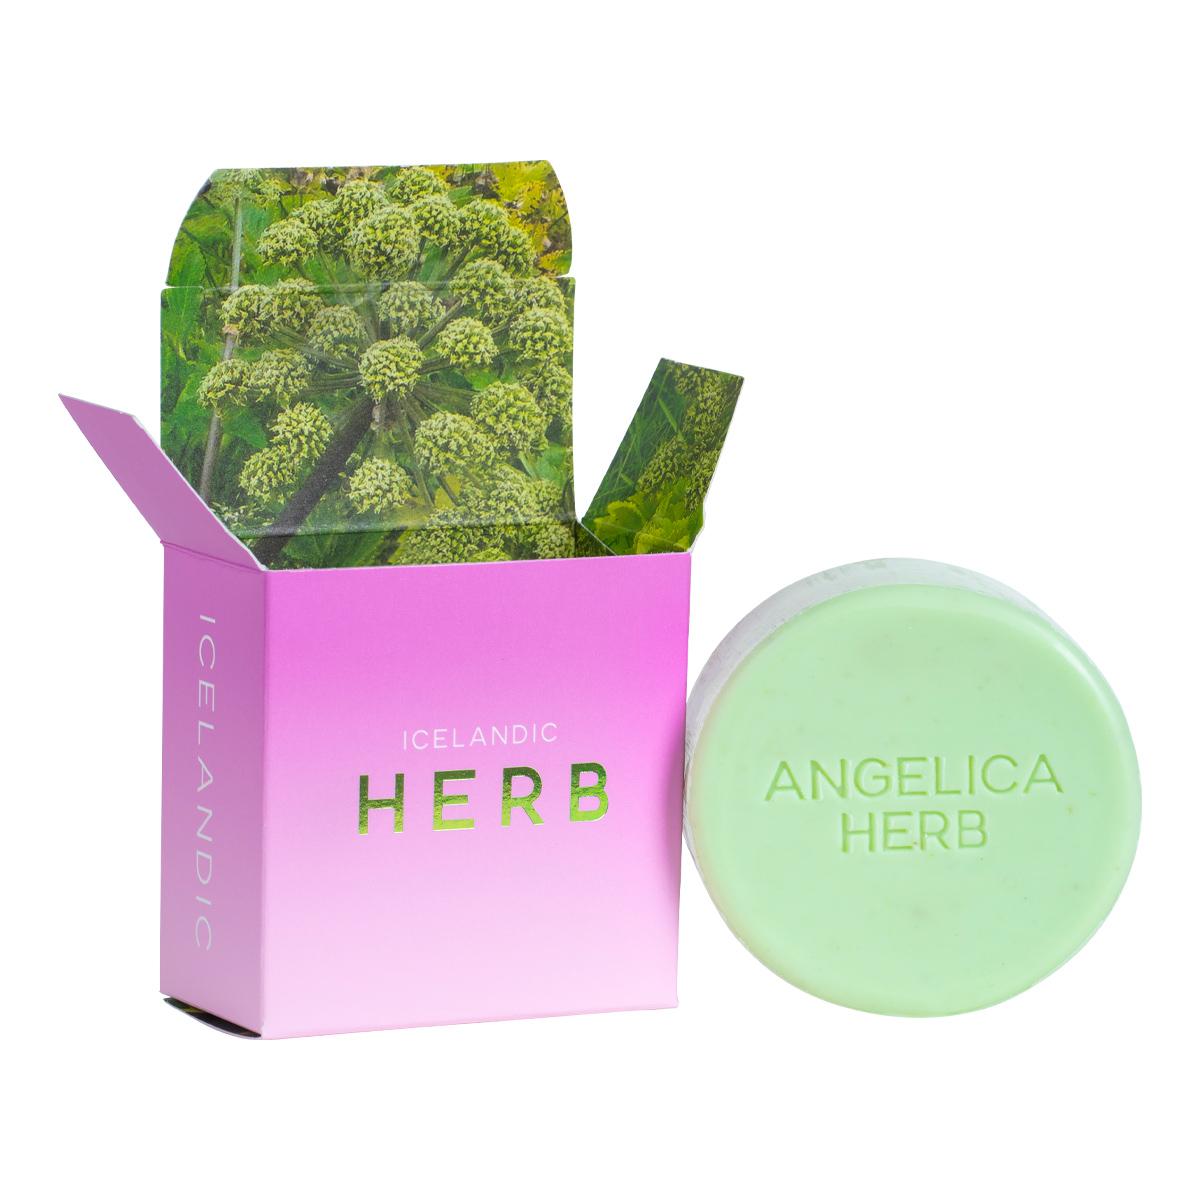 Primary image of Hallo Sapa - Angelica Herb Soap